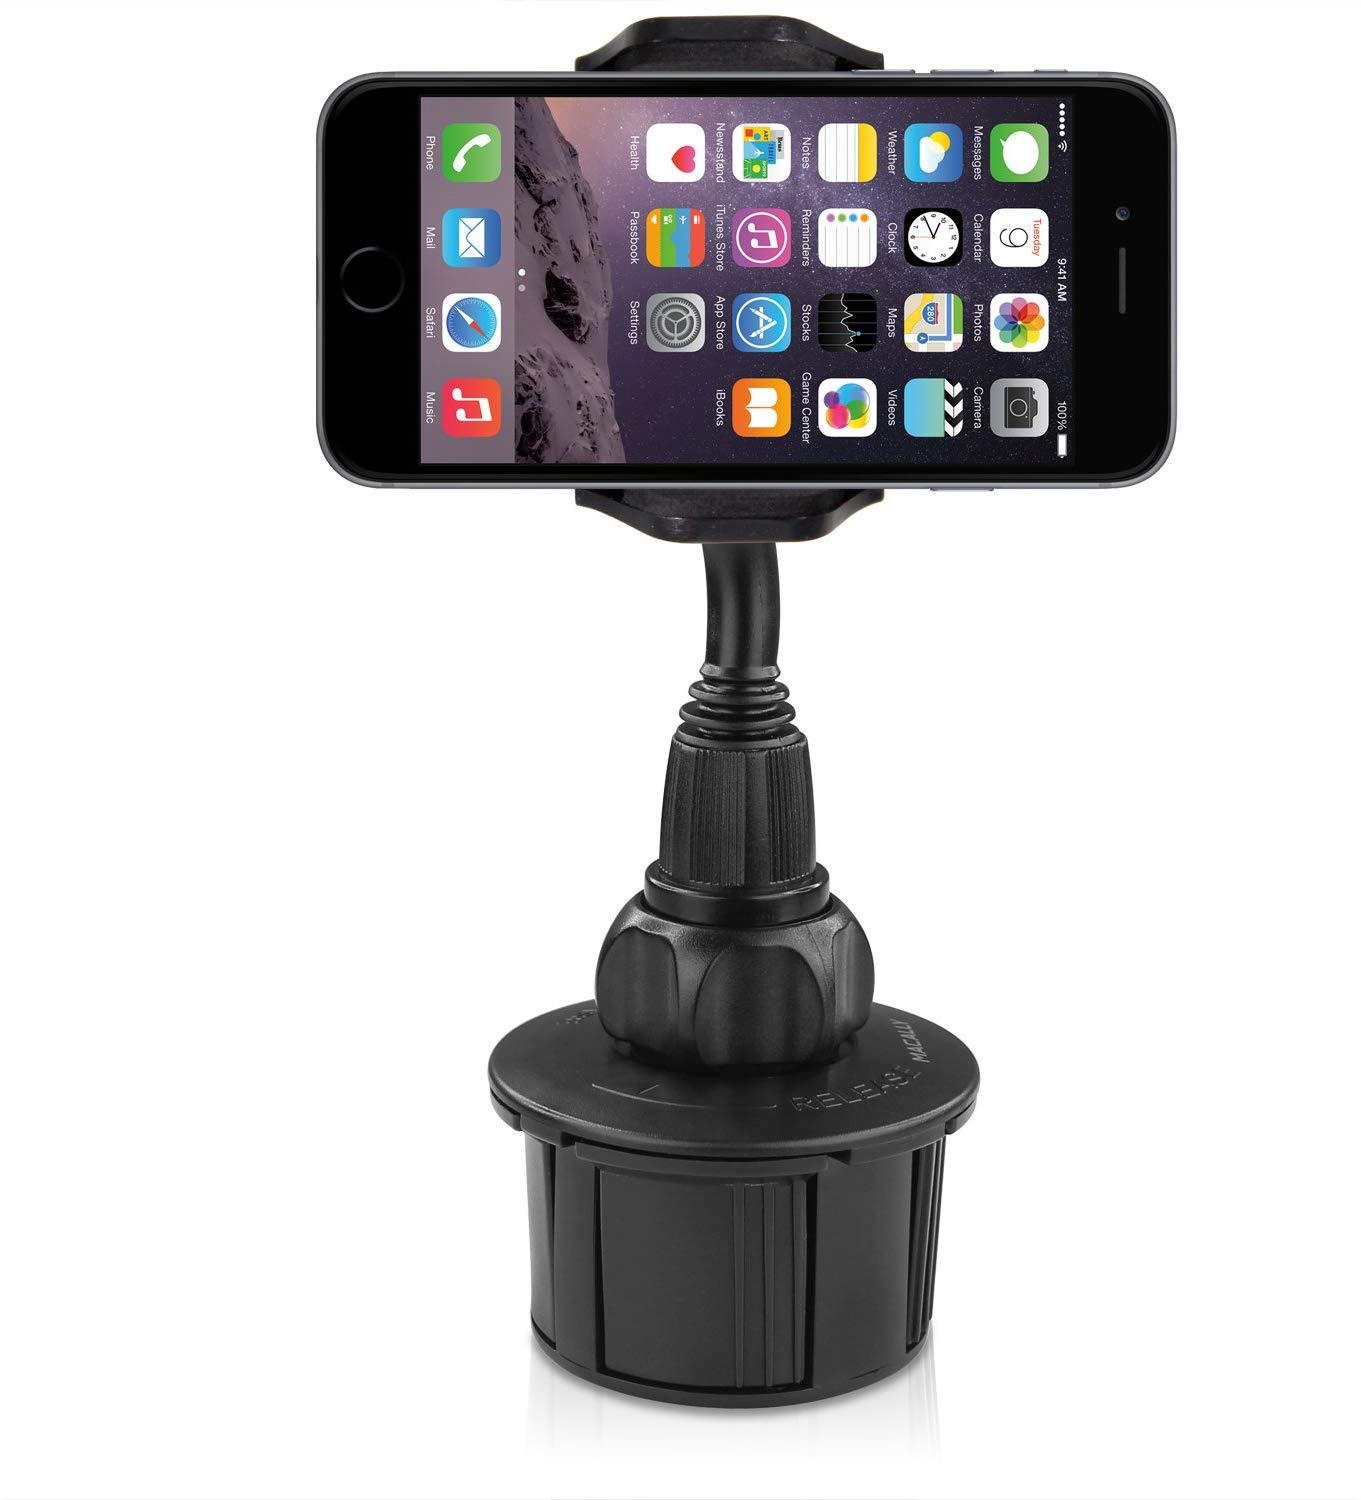 MCUPMP Adjustable Cup Holder Phone Mount